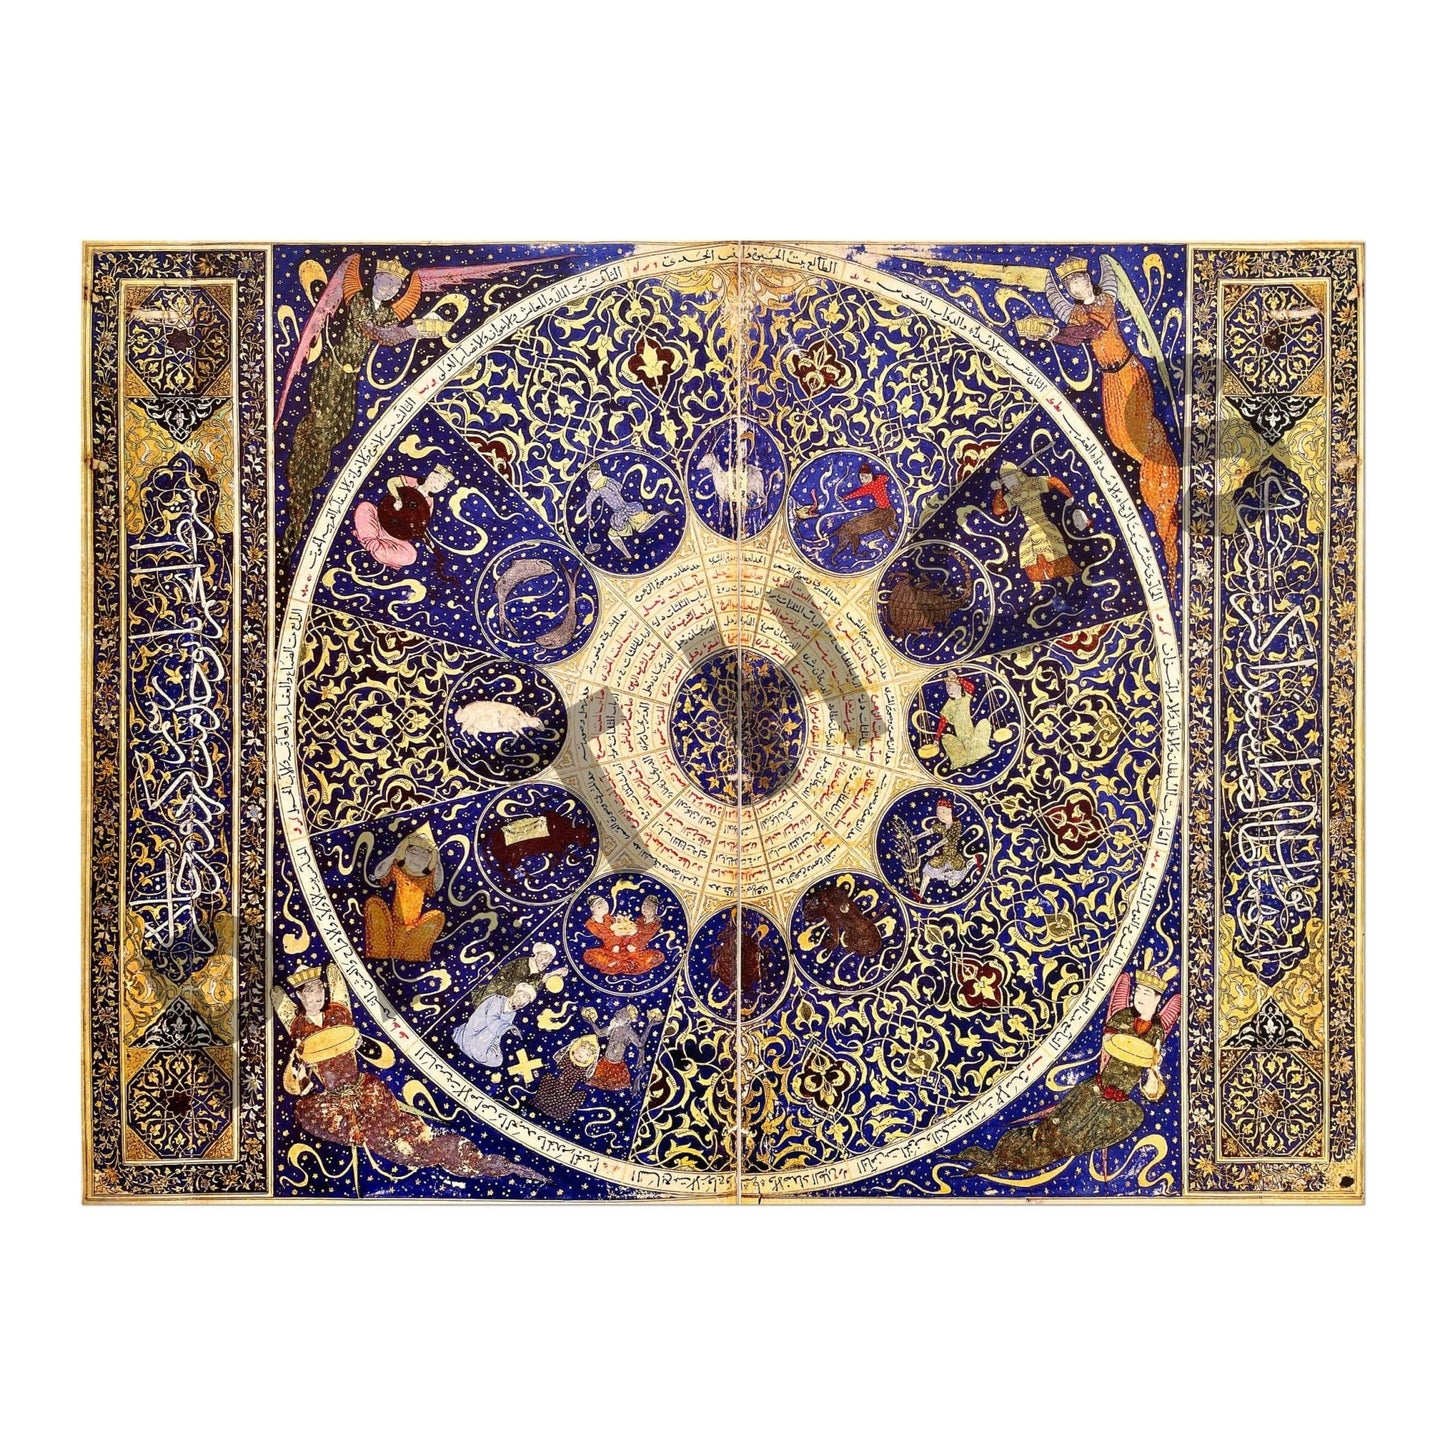 Tableau du zodiaque du prince Eskandar-Soltan (art horoscope persan)